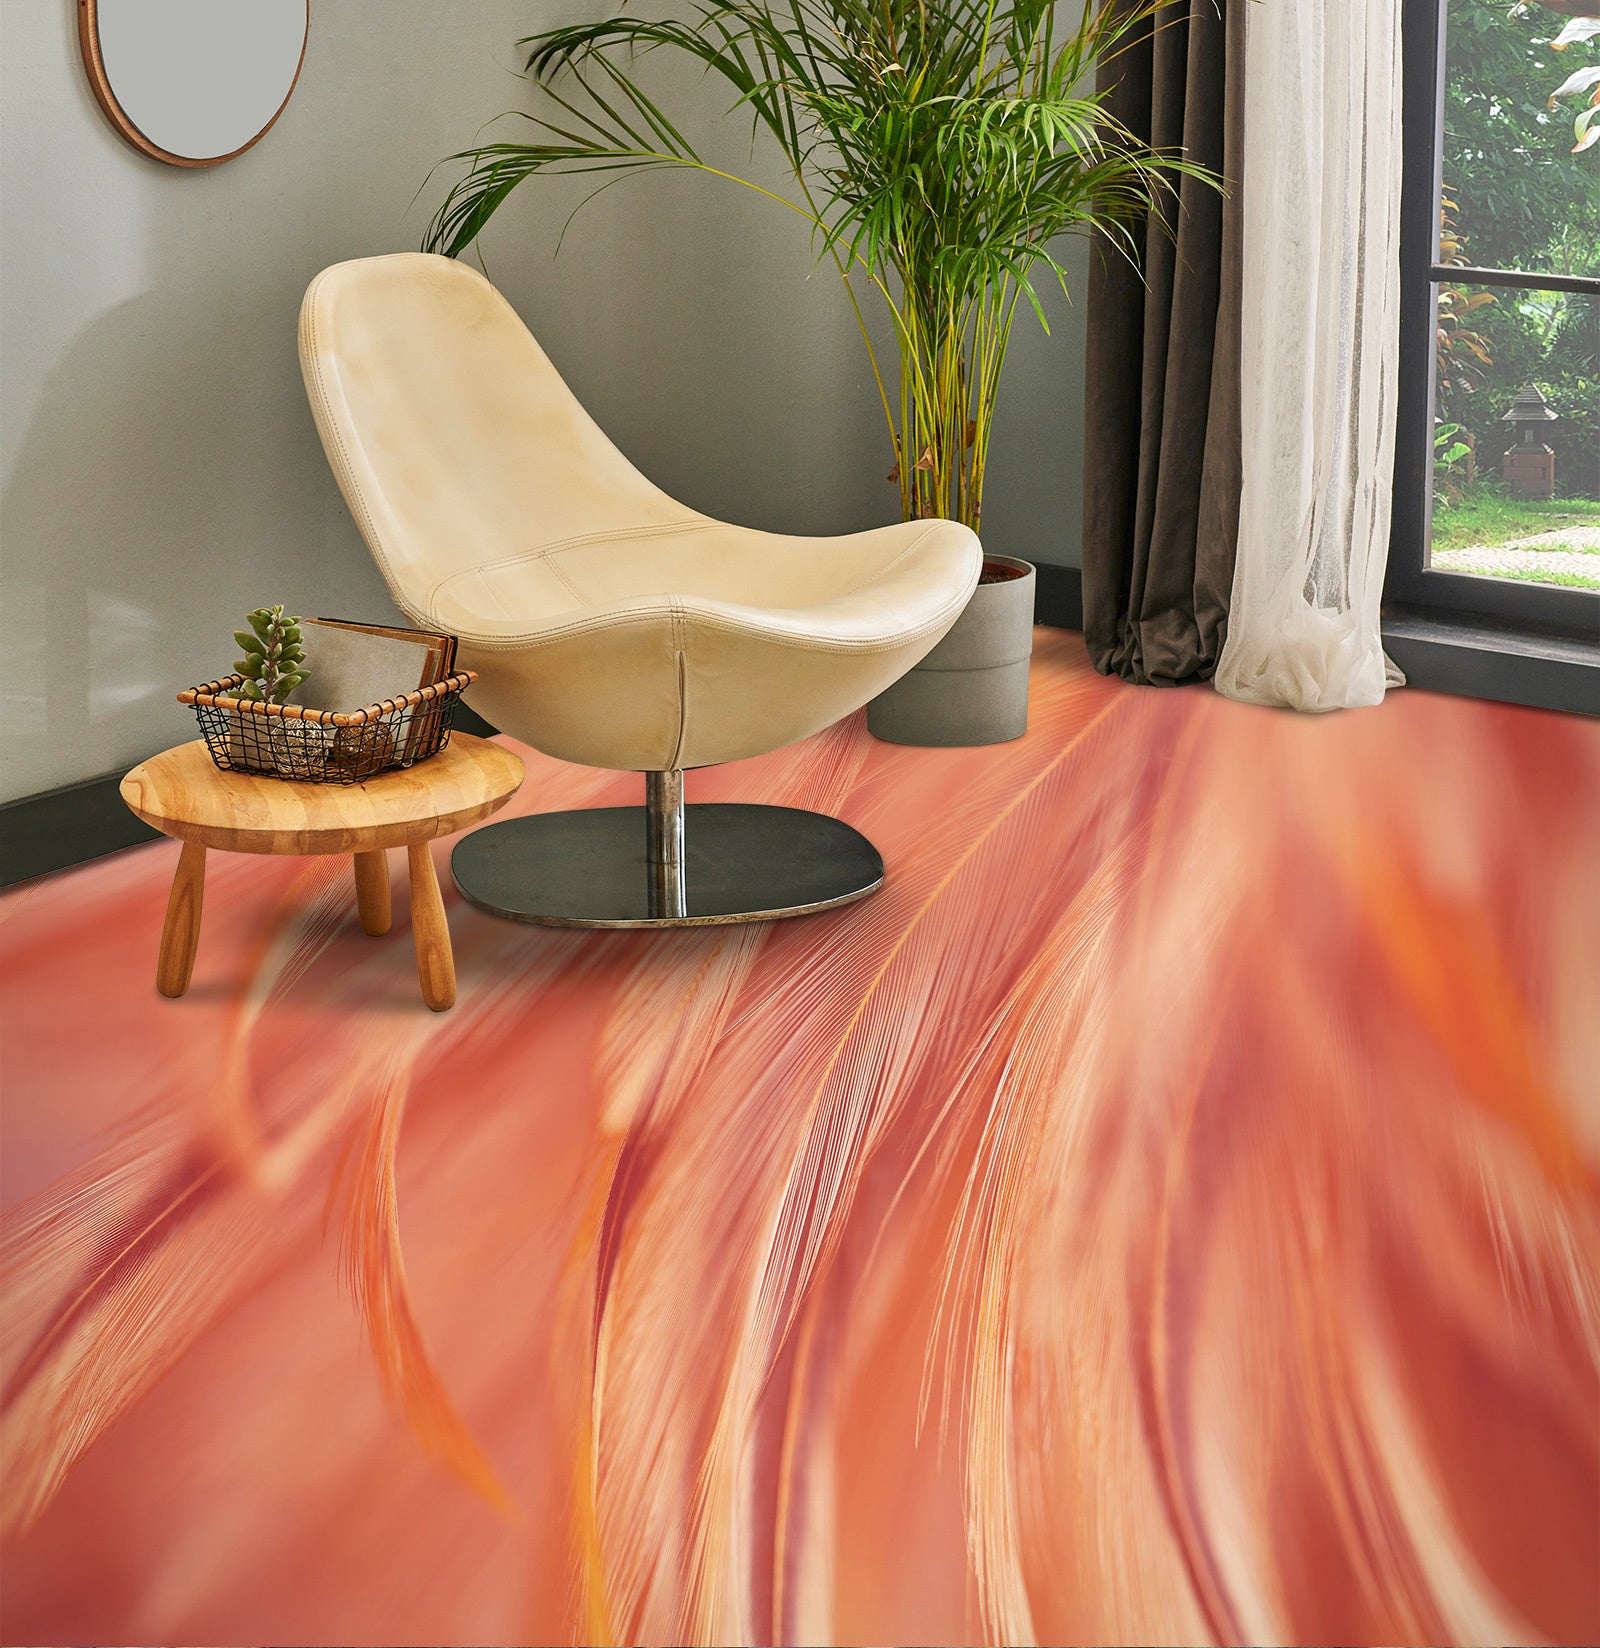 3D Orange Feathers 1144 Floor Mural  Wallpaper Murals Self-Adhesive Removable Print Epoxy